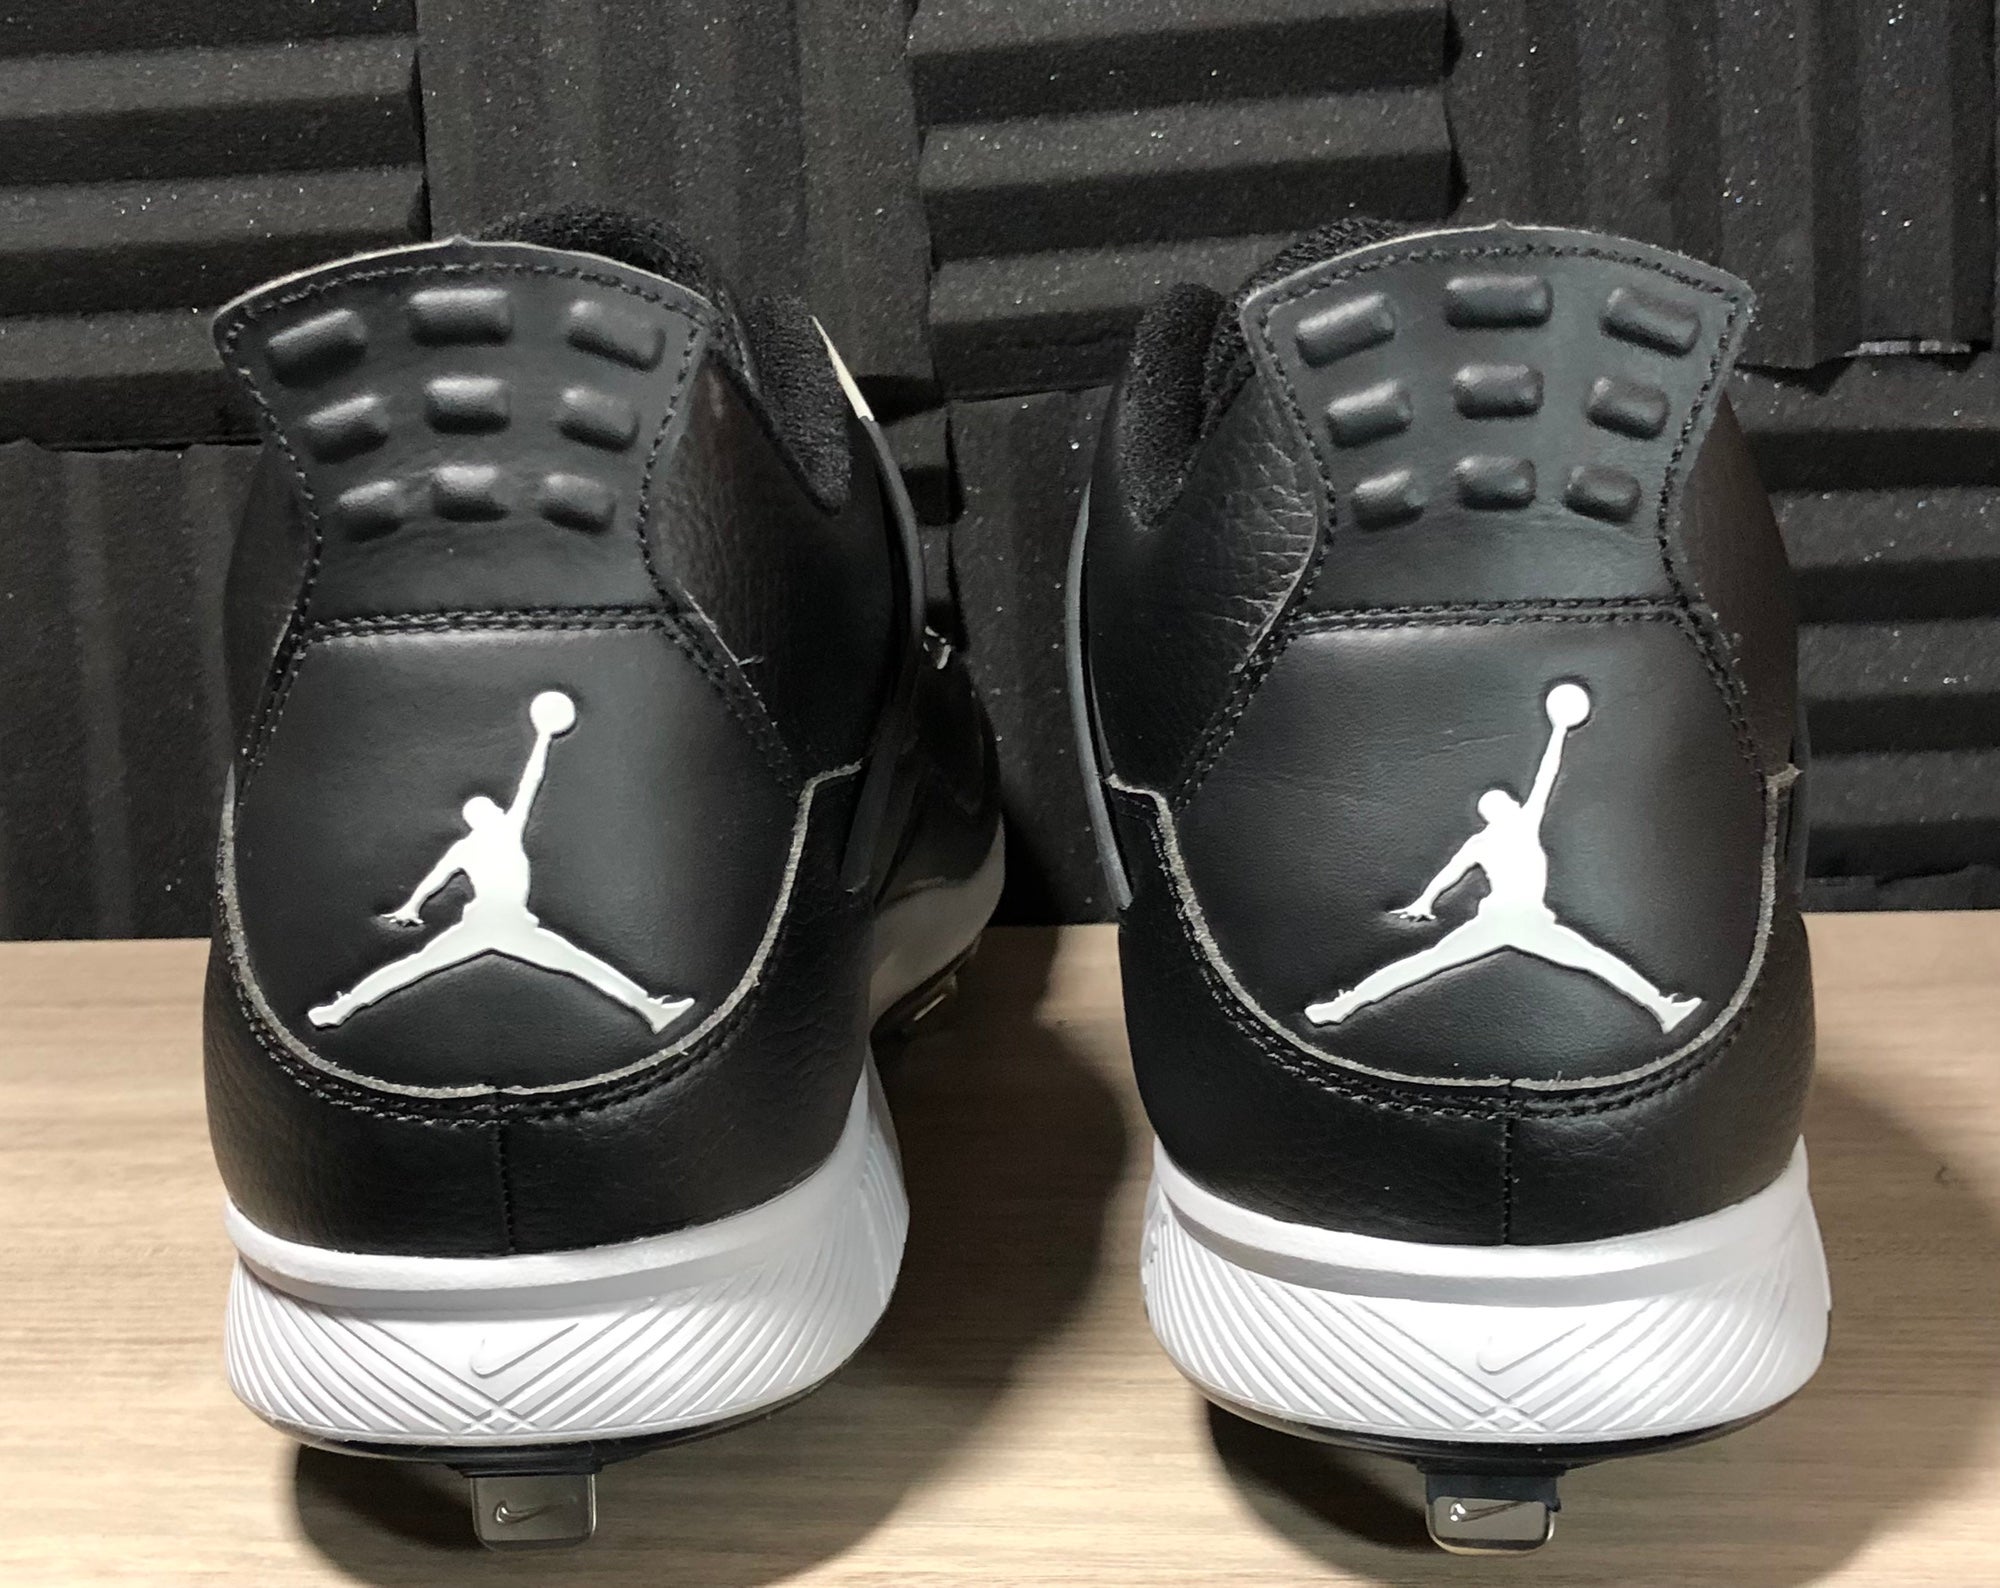 Nike Air Jordan 4 lV Retro Baseball Metal Cleats Black 807710-010